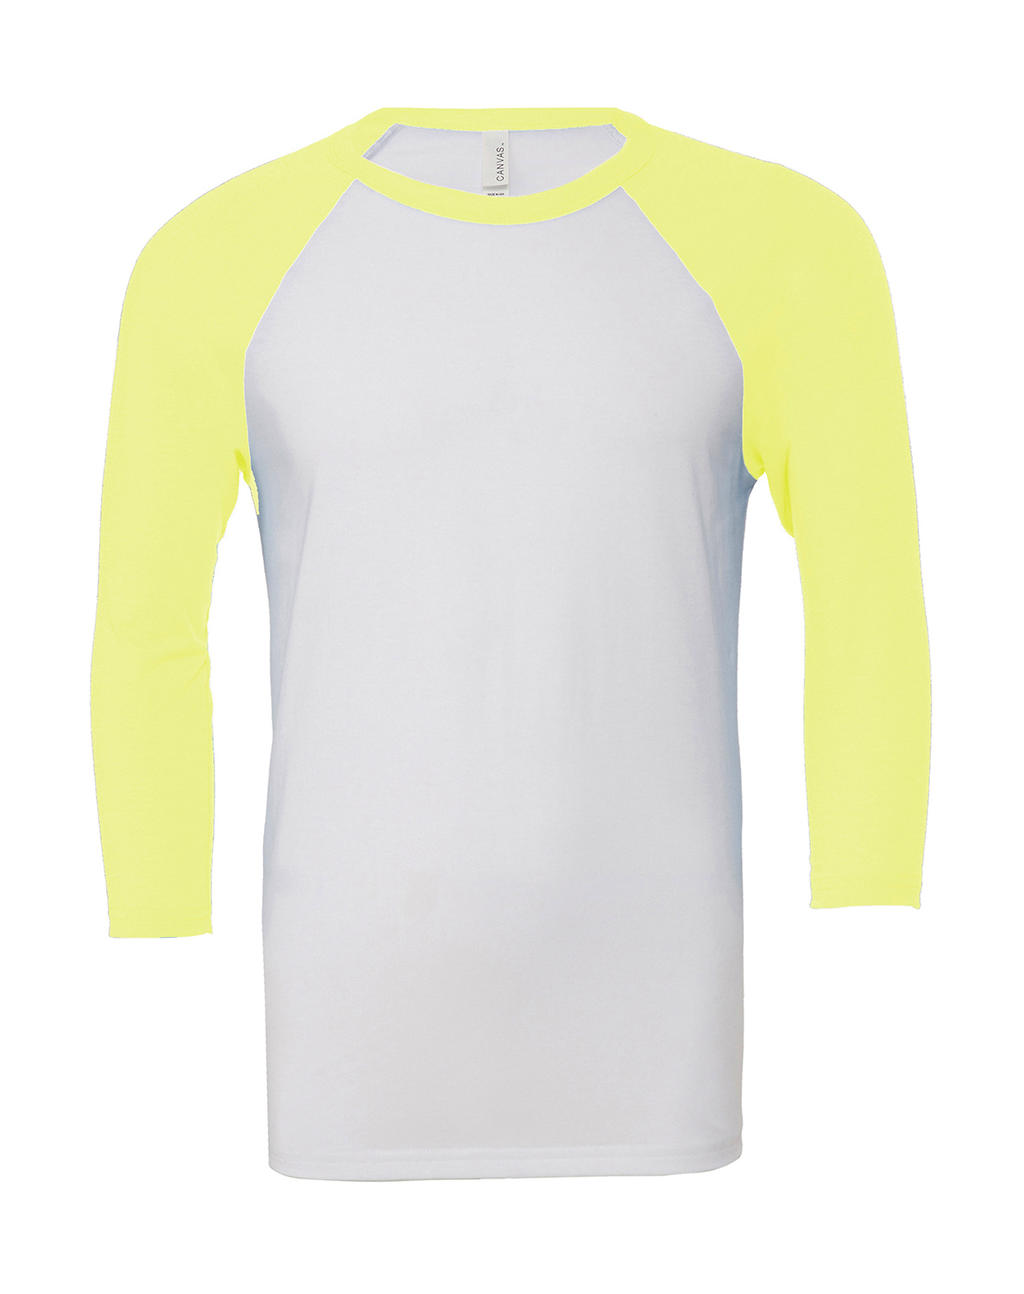  Unisex 3/4 Sleeve Baseball T-Shirt in Farbe White/Neon Yellow